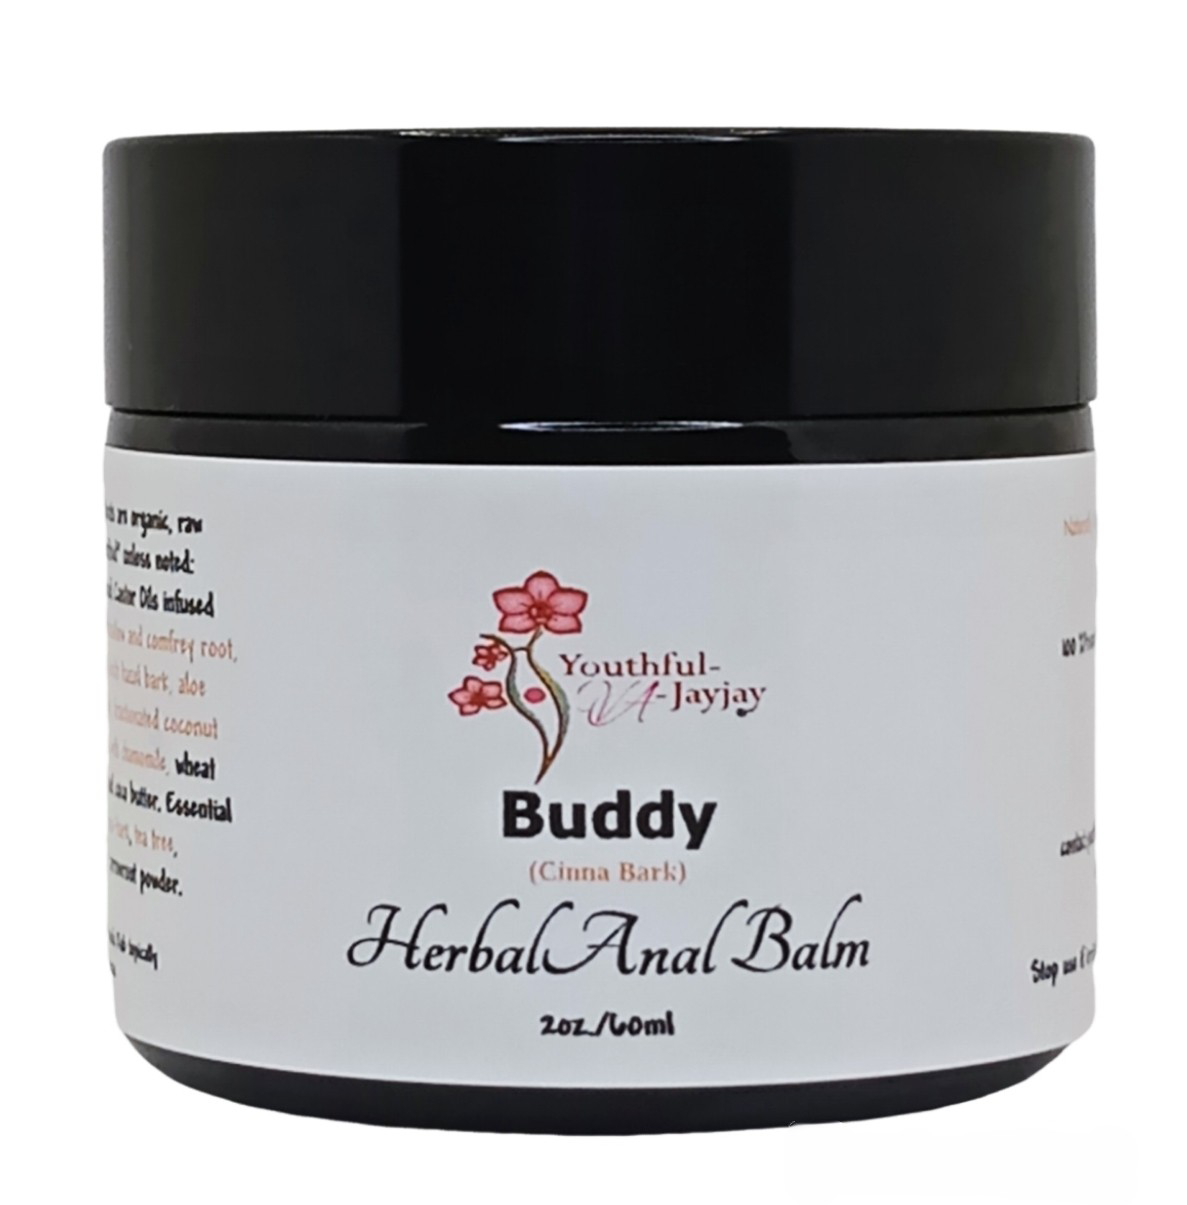 BUDDY: Organic Herbal Anal Balm, Antibacterial Cinna Bark- For Him, 2oz.